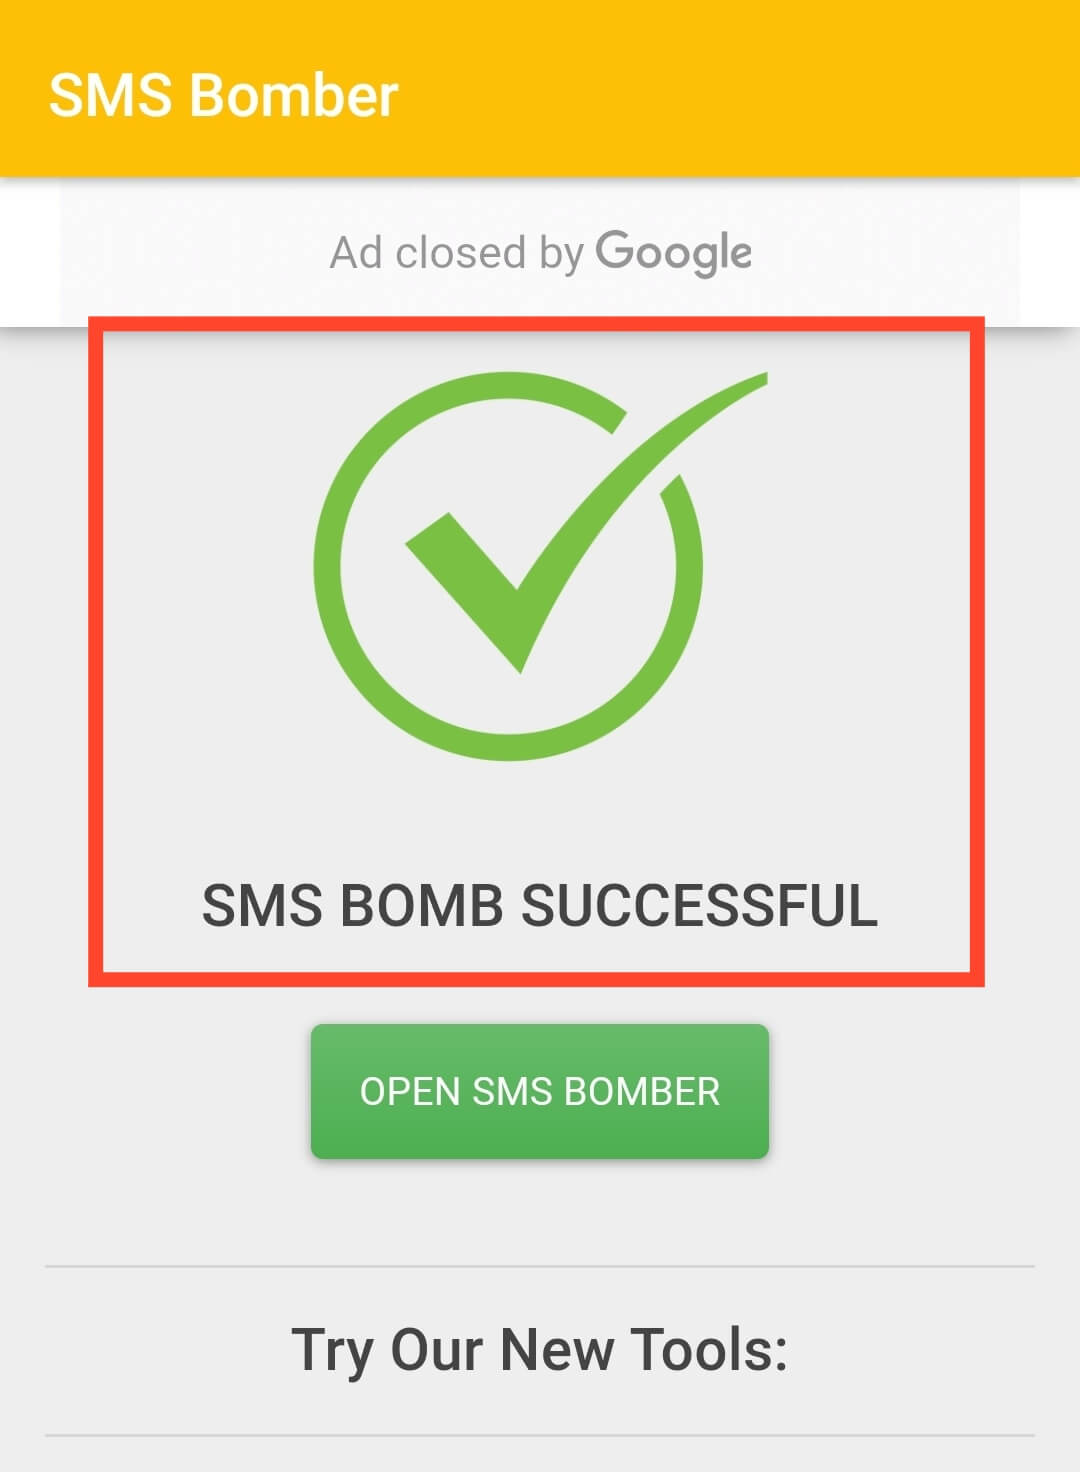 SMS BOMB SUCCESSFUL